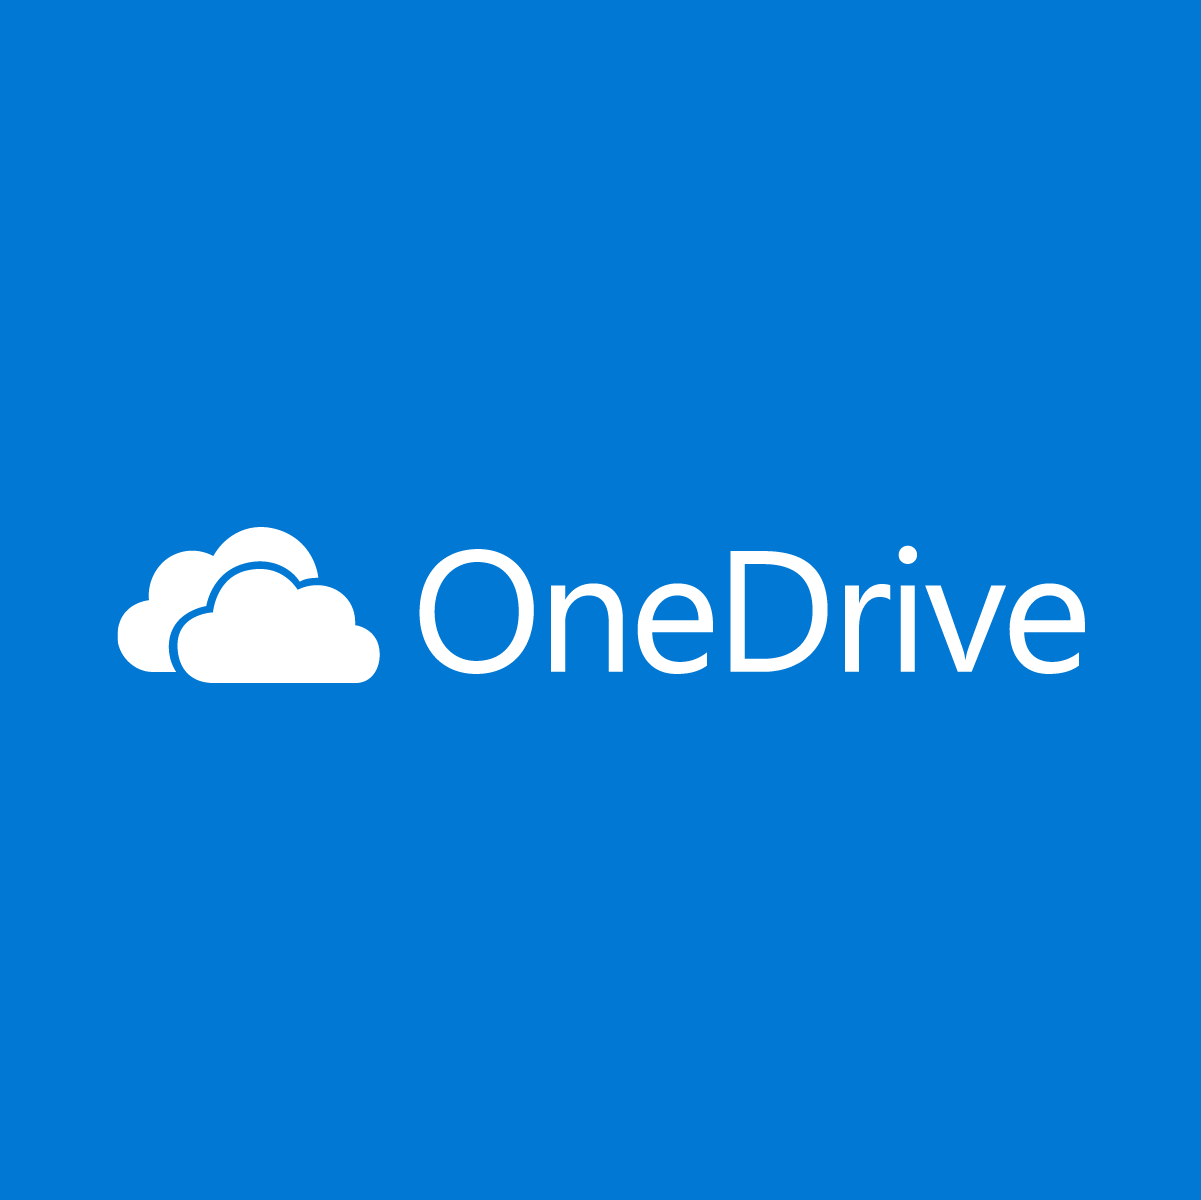 MS Outlook Logo - Microsoft OneDrive